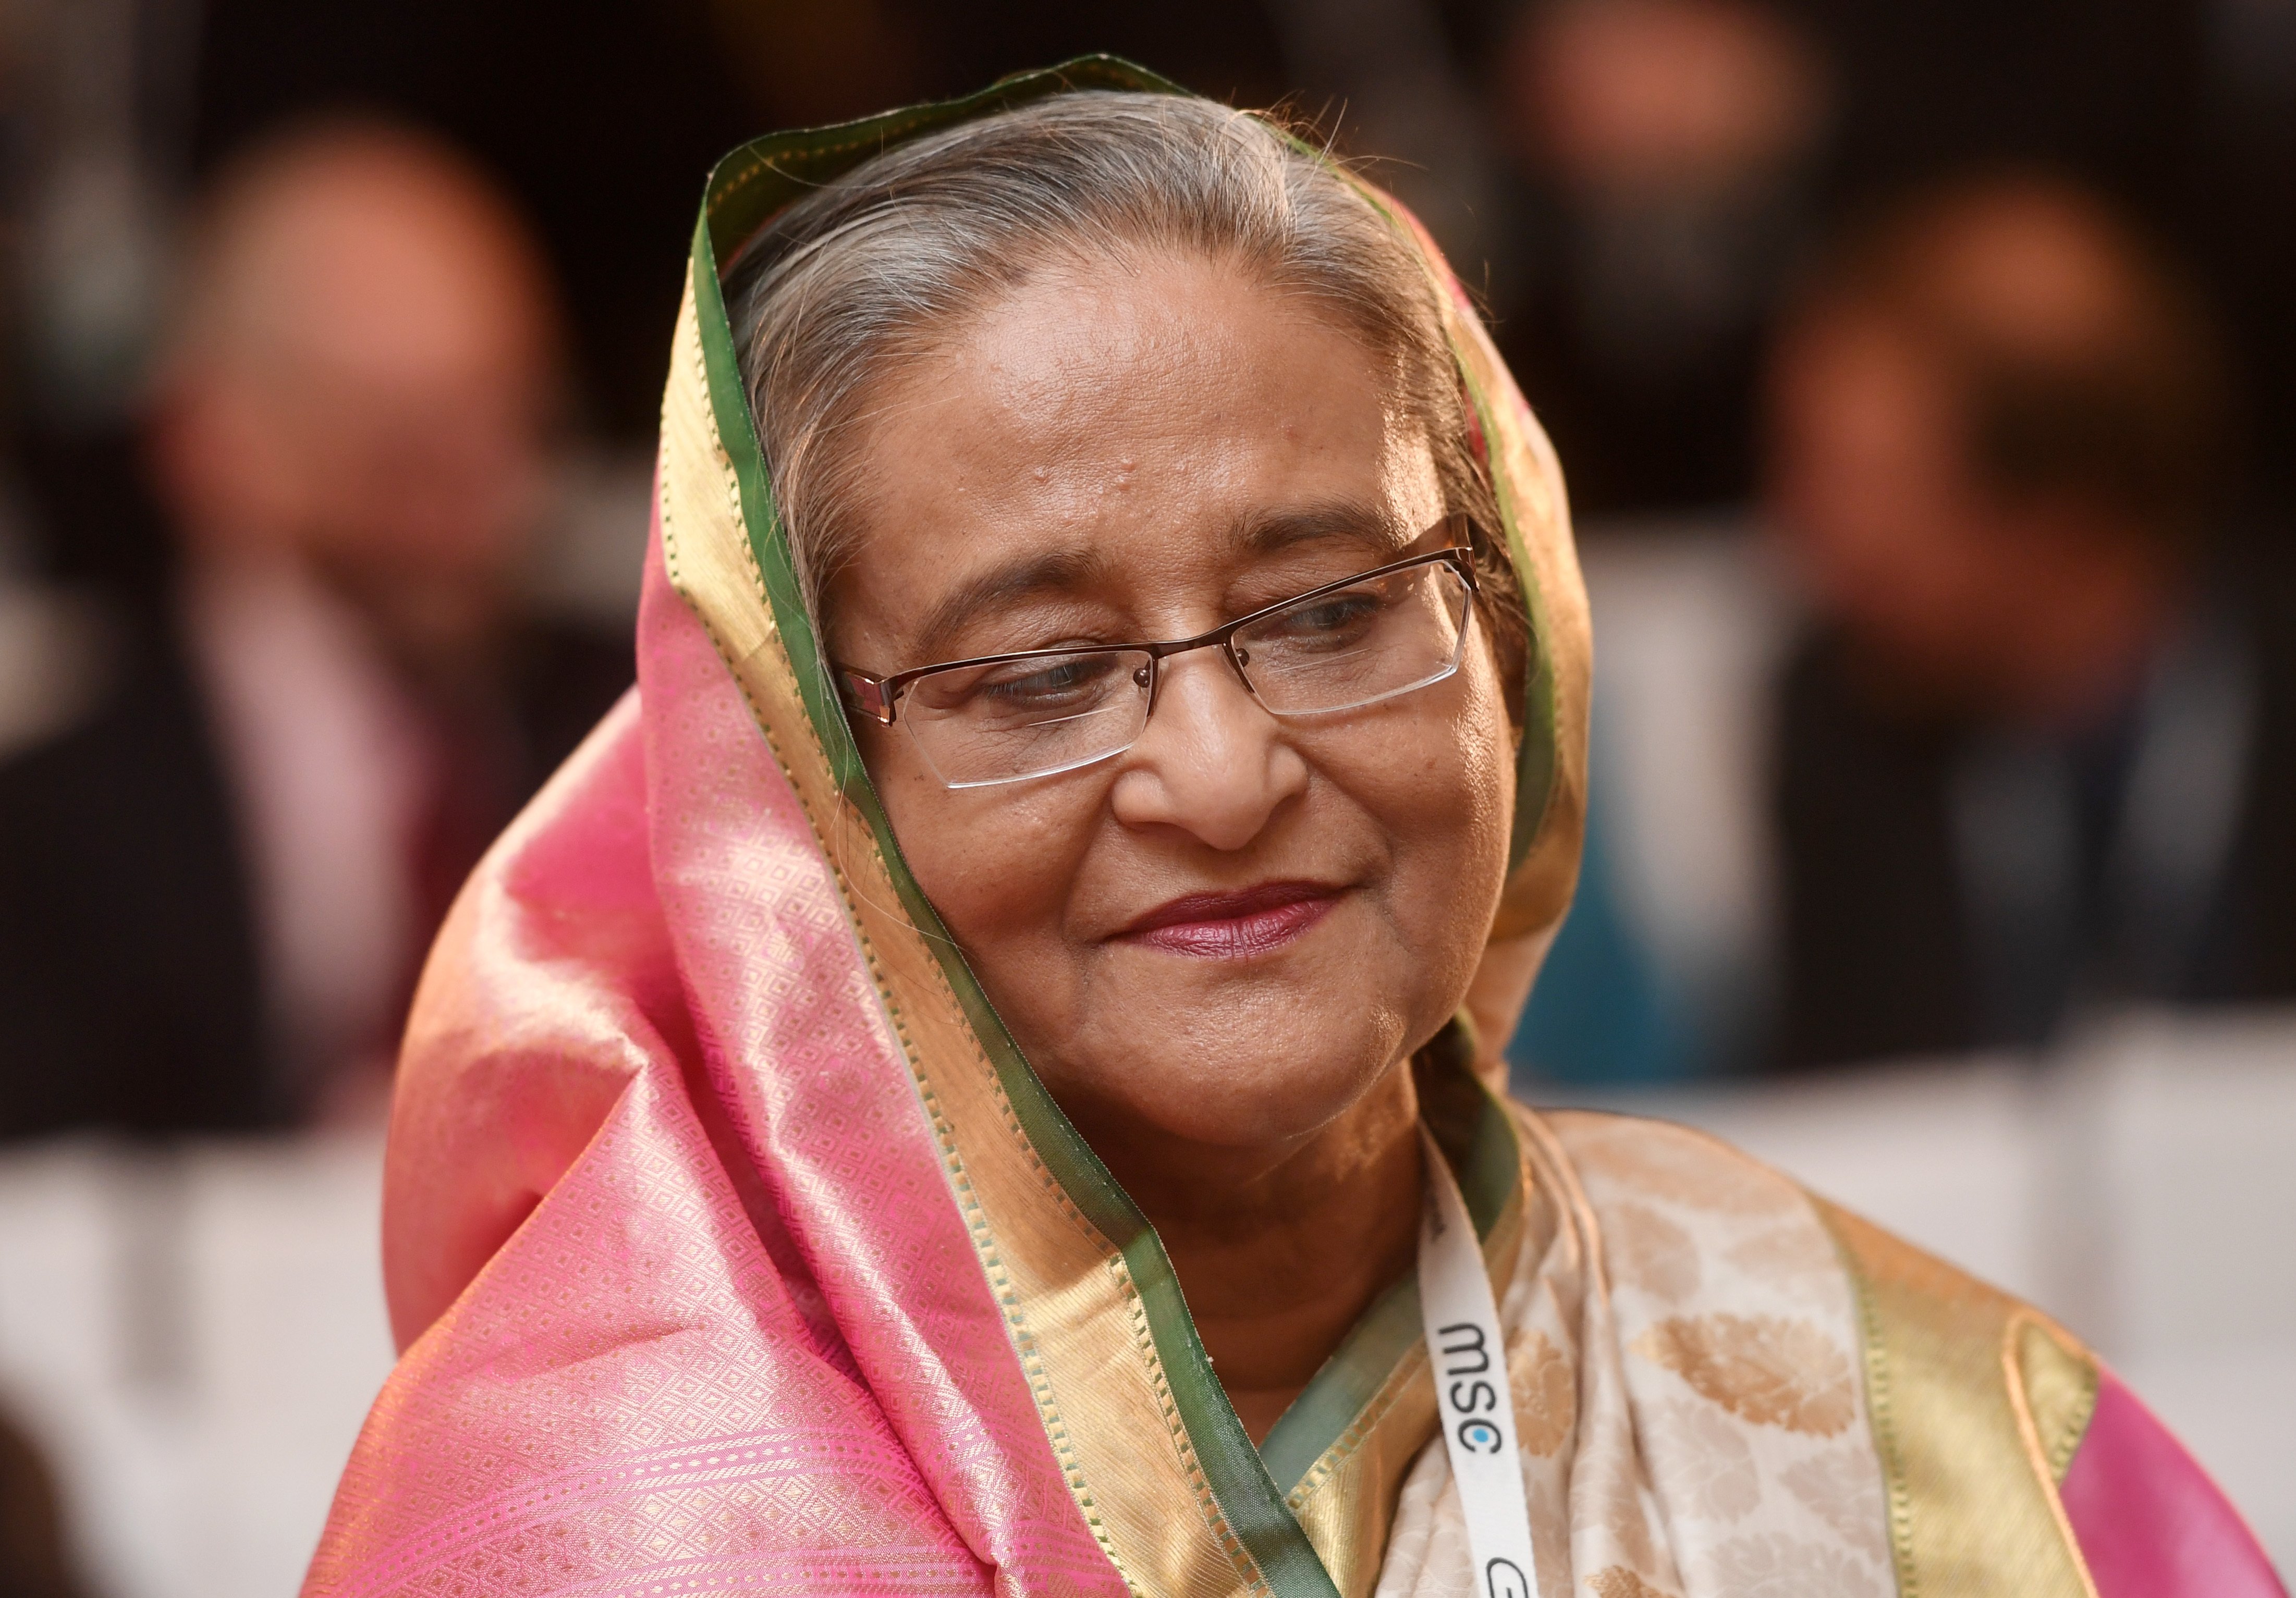 Sheikh Hasina, Bangladeshi Prime Minister. Source: Global Look Press